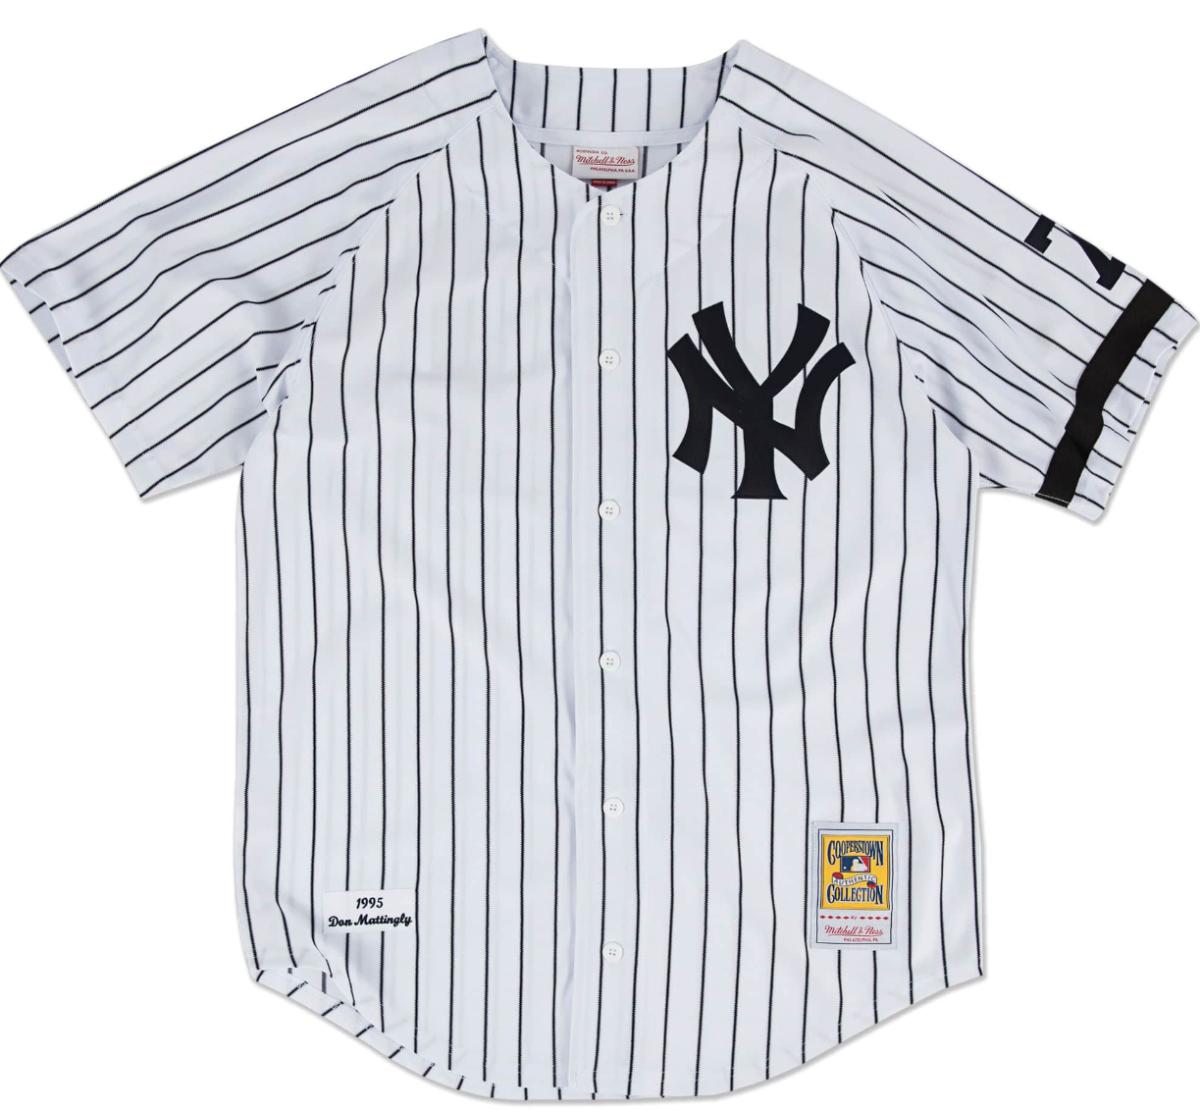 New York Yankees Gear & Apparel